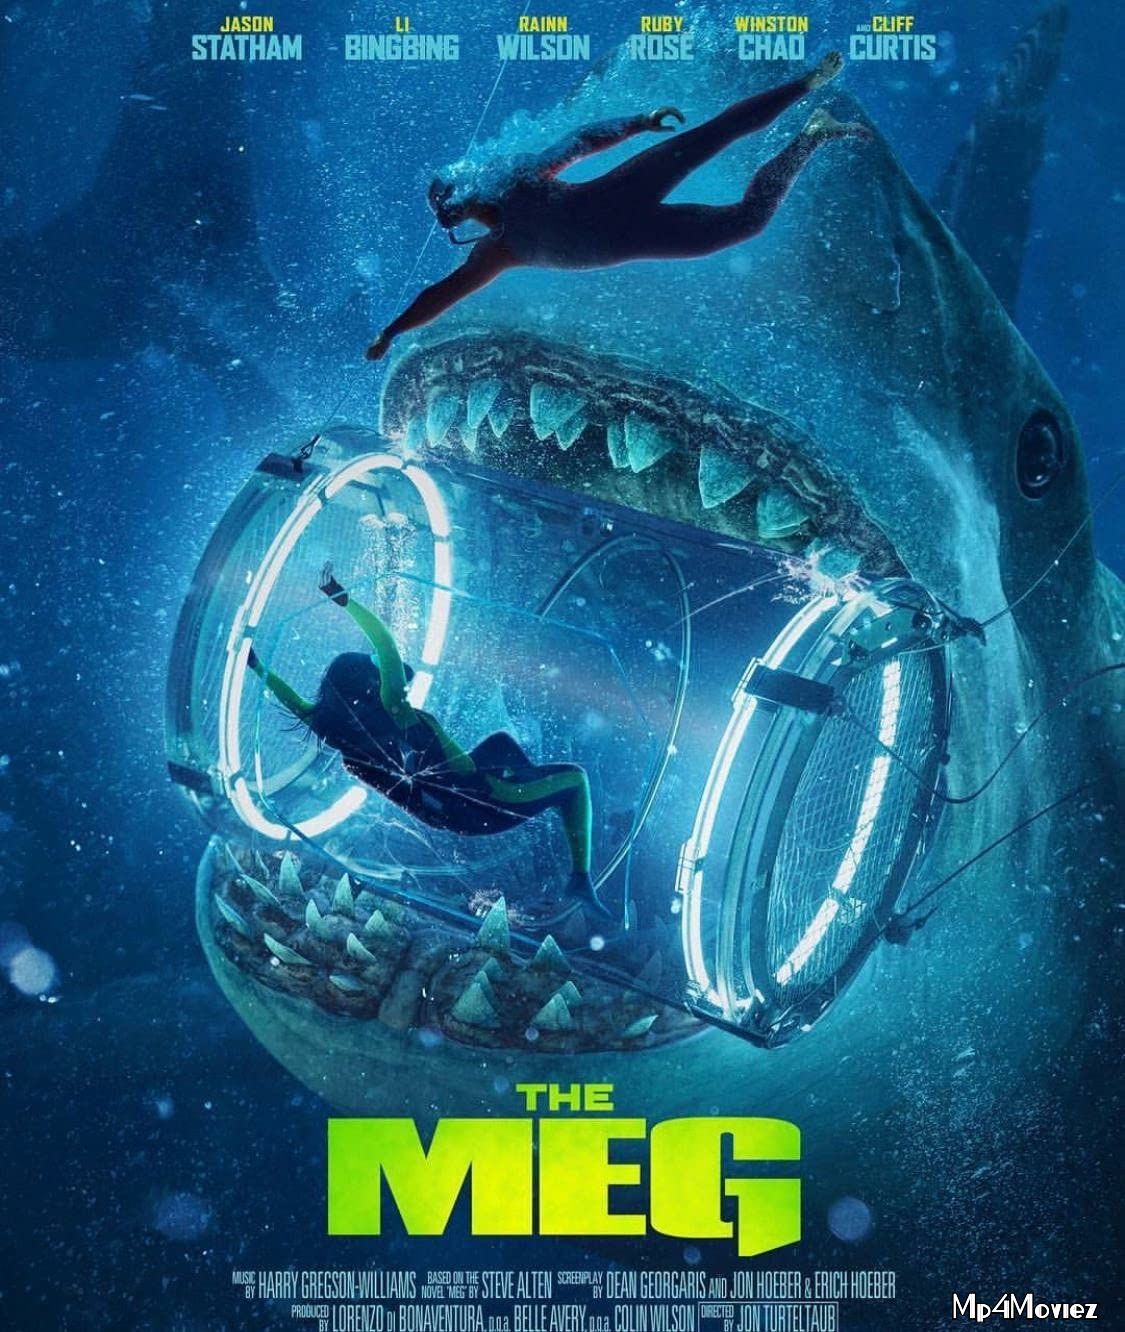 The Meg (2018) Hindi Dubbed BRRip download full movie